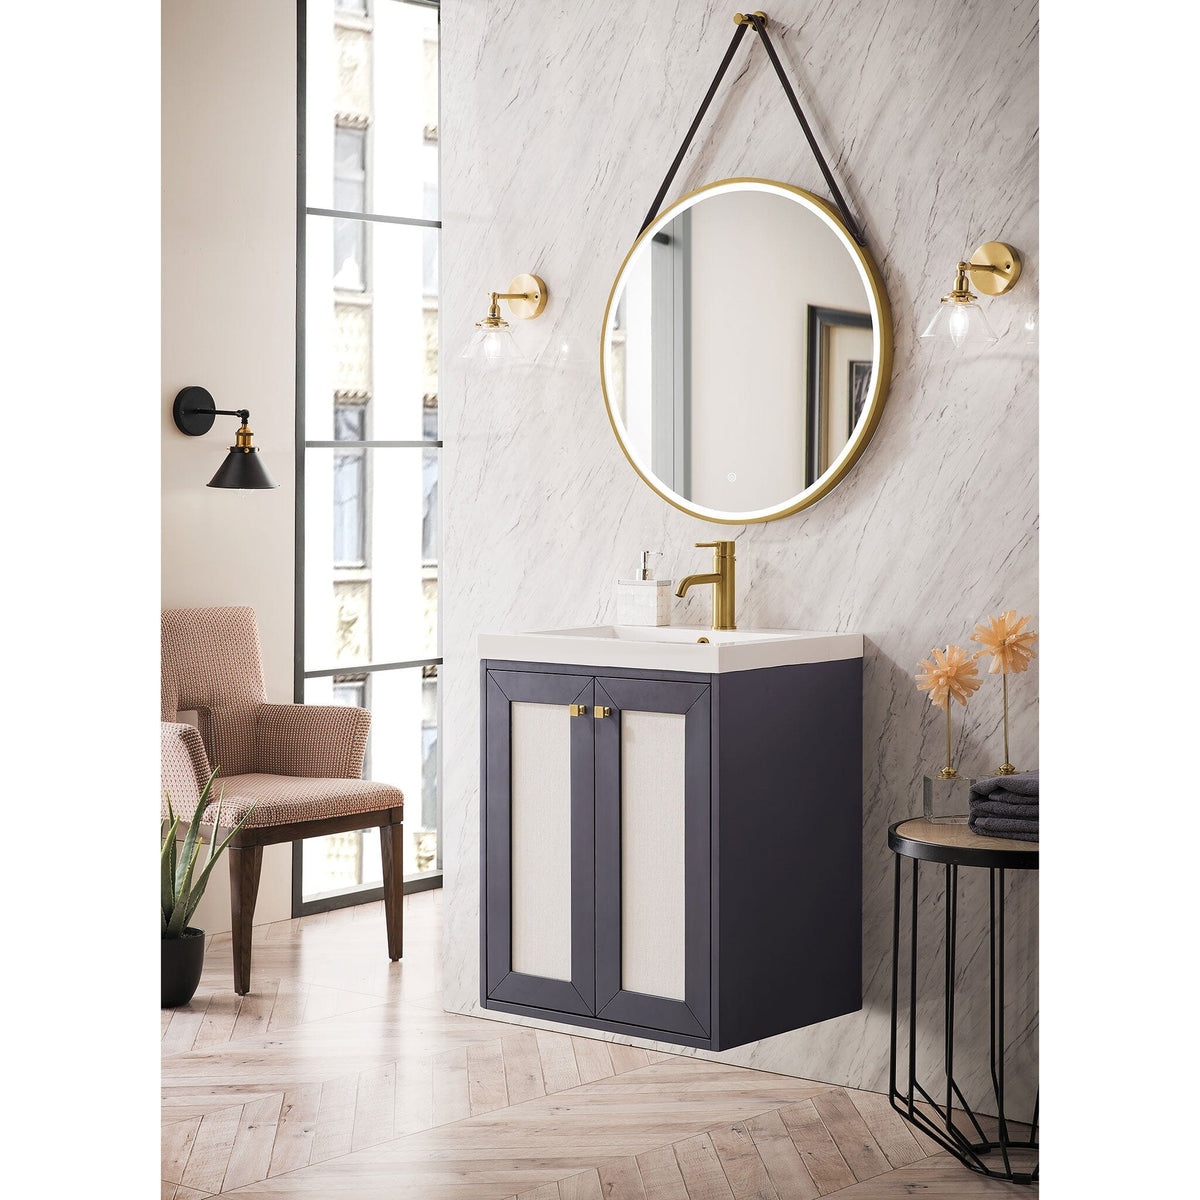 24" Chianti Single Bathroom Vanity, Mineral Gray